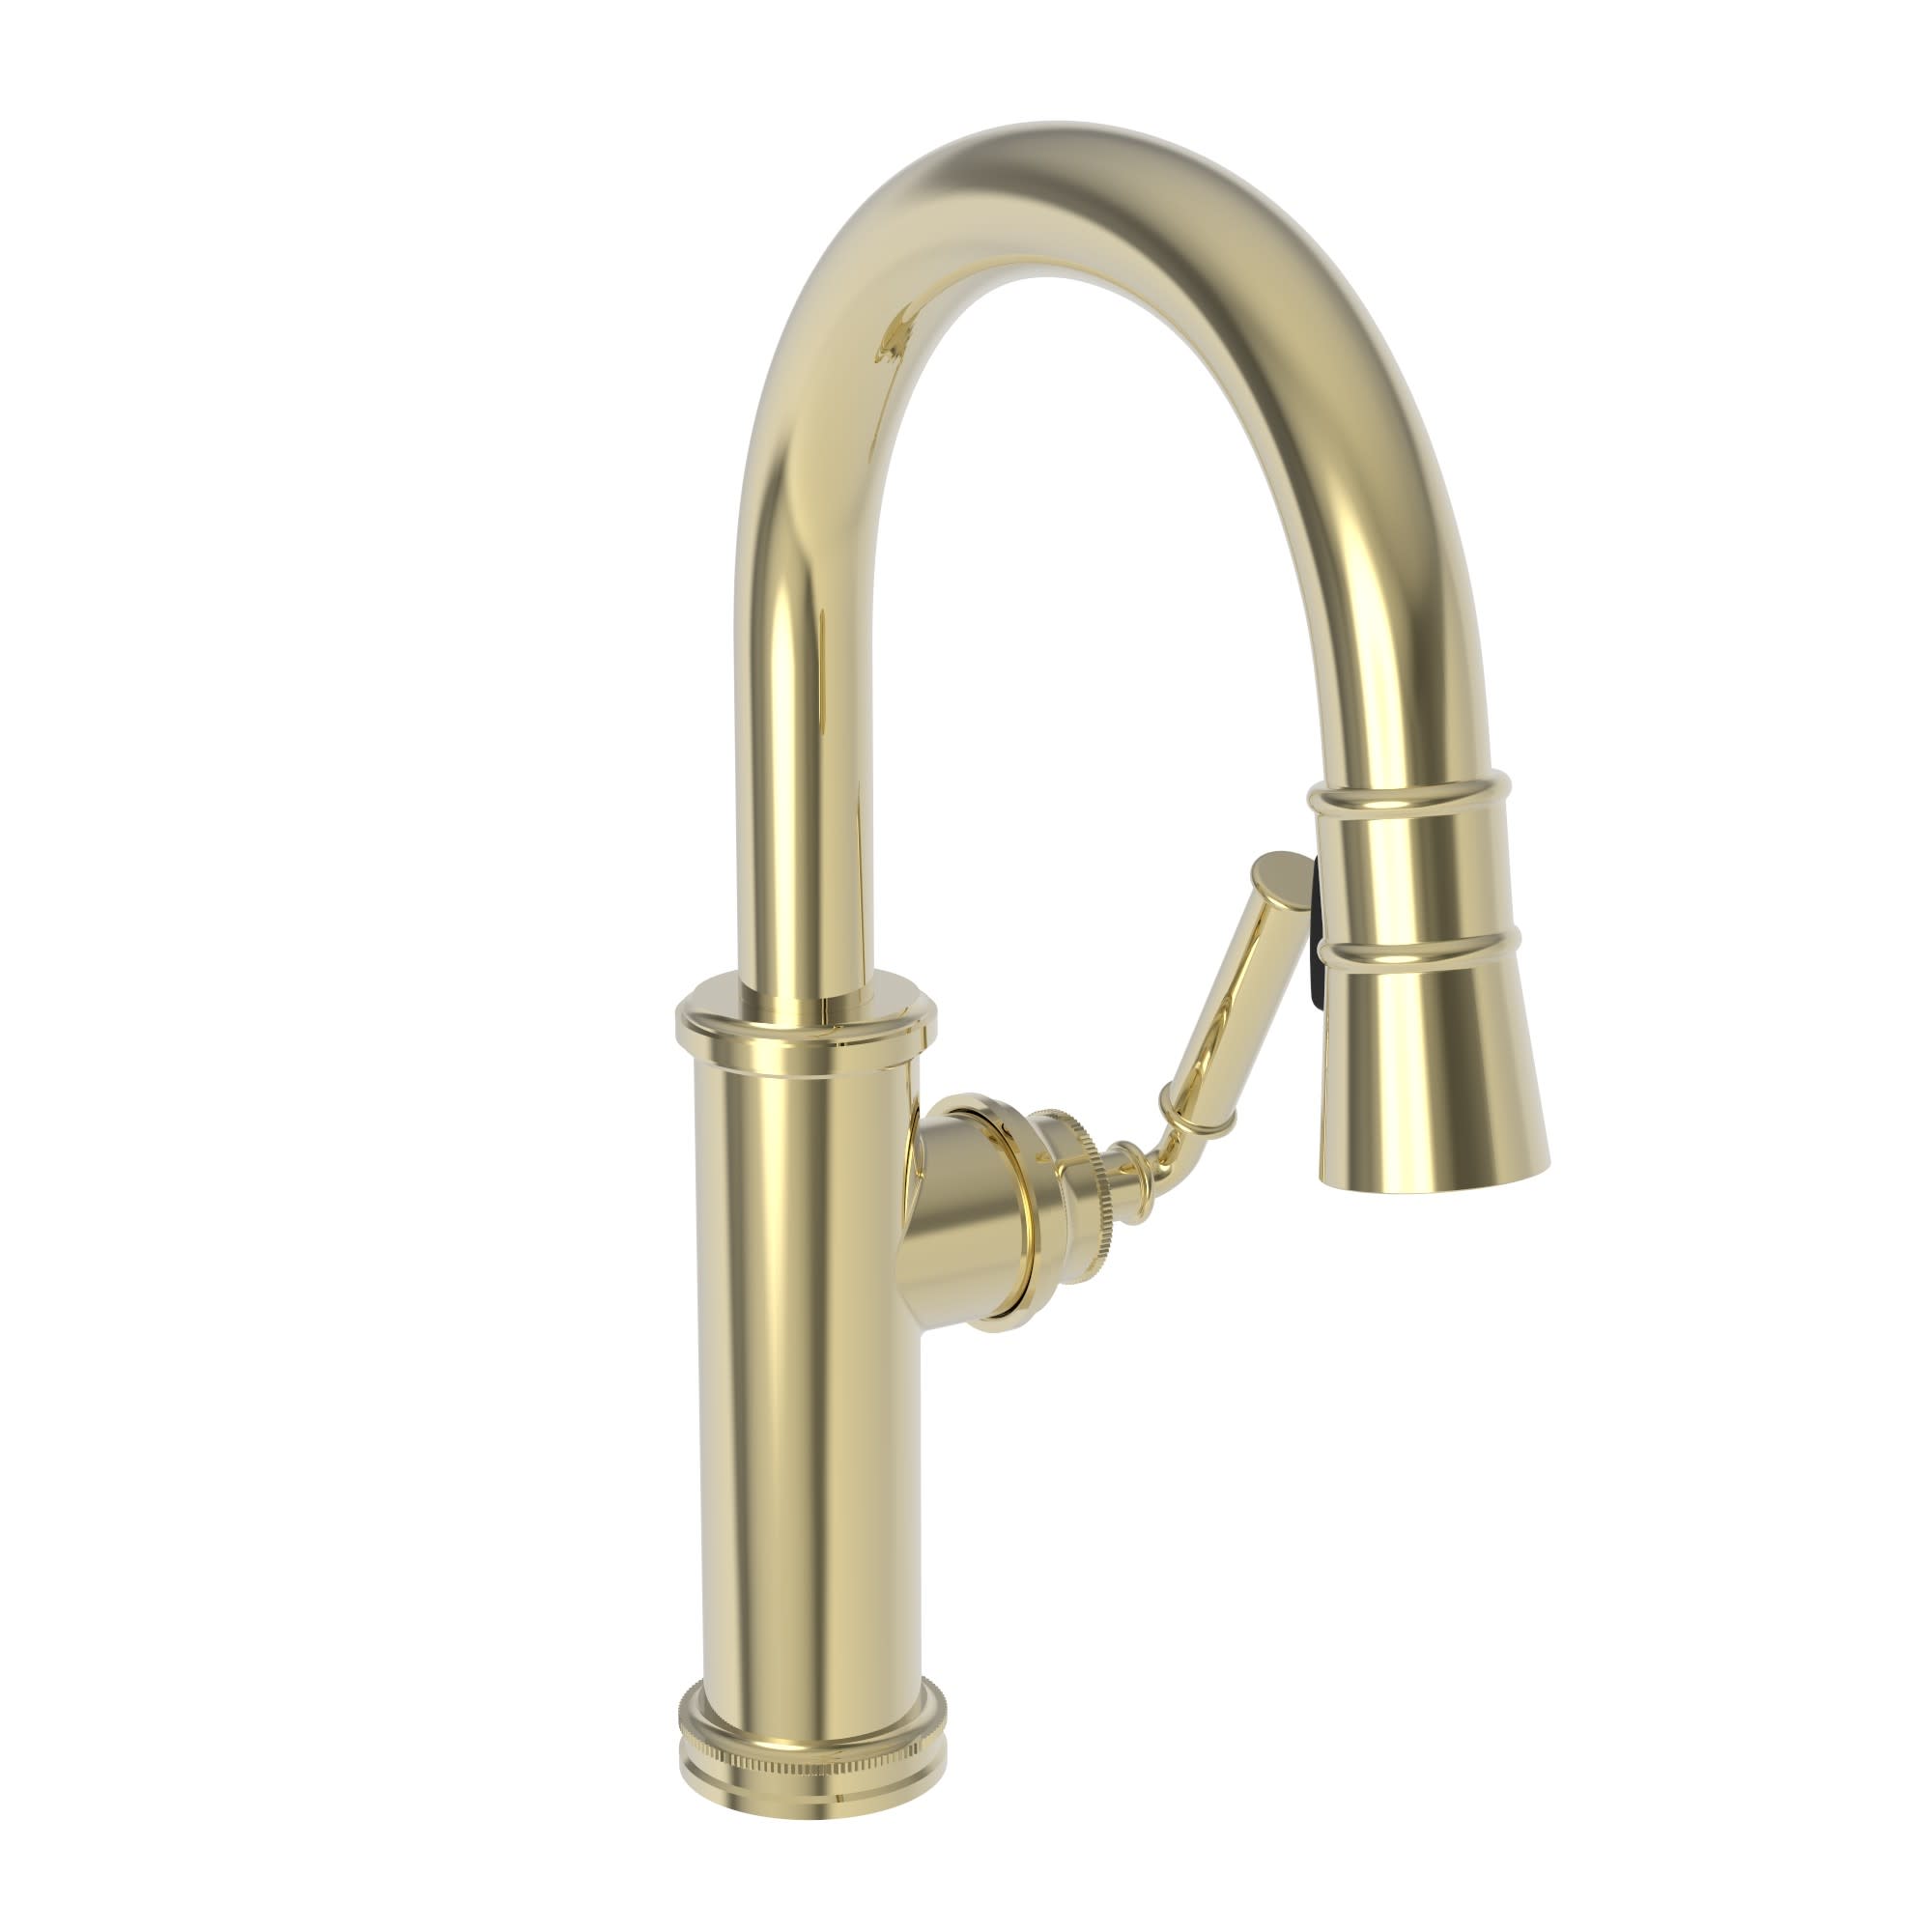 Newport Brass 1200-5223/04 Metropole Prep/Bar Pull Down Faucet